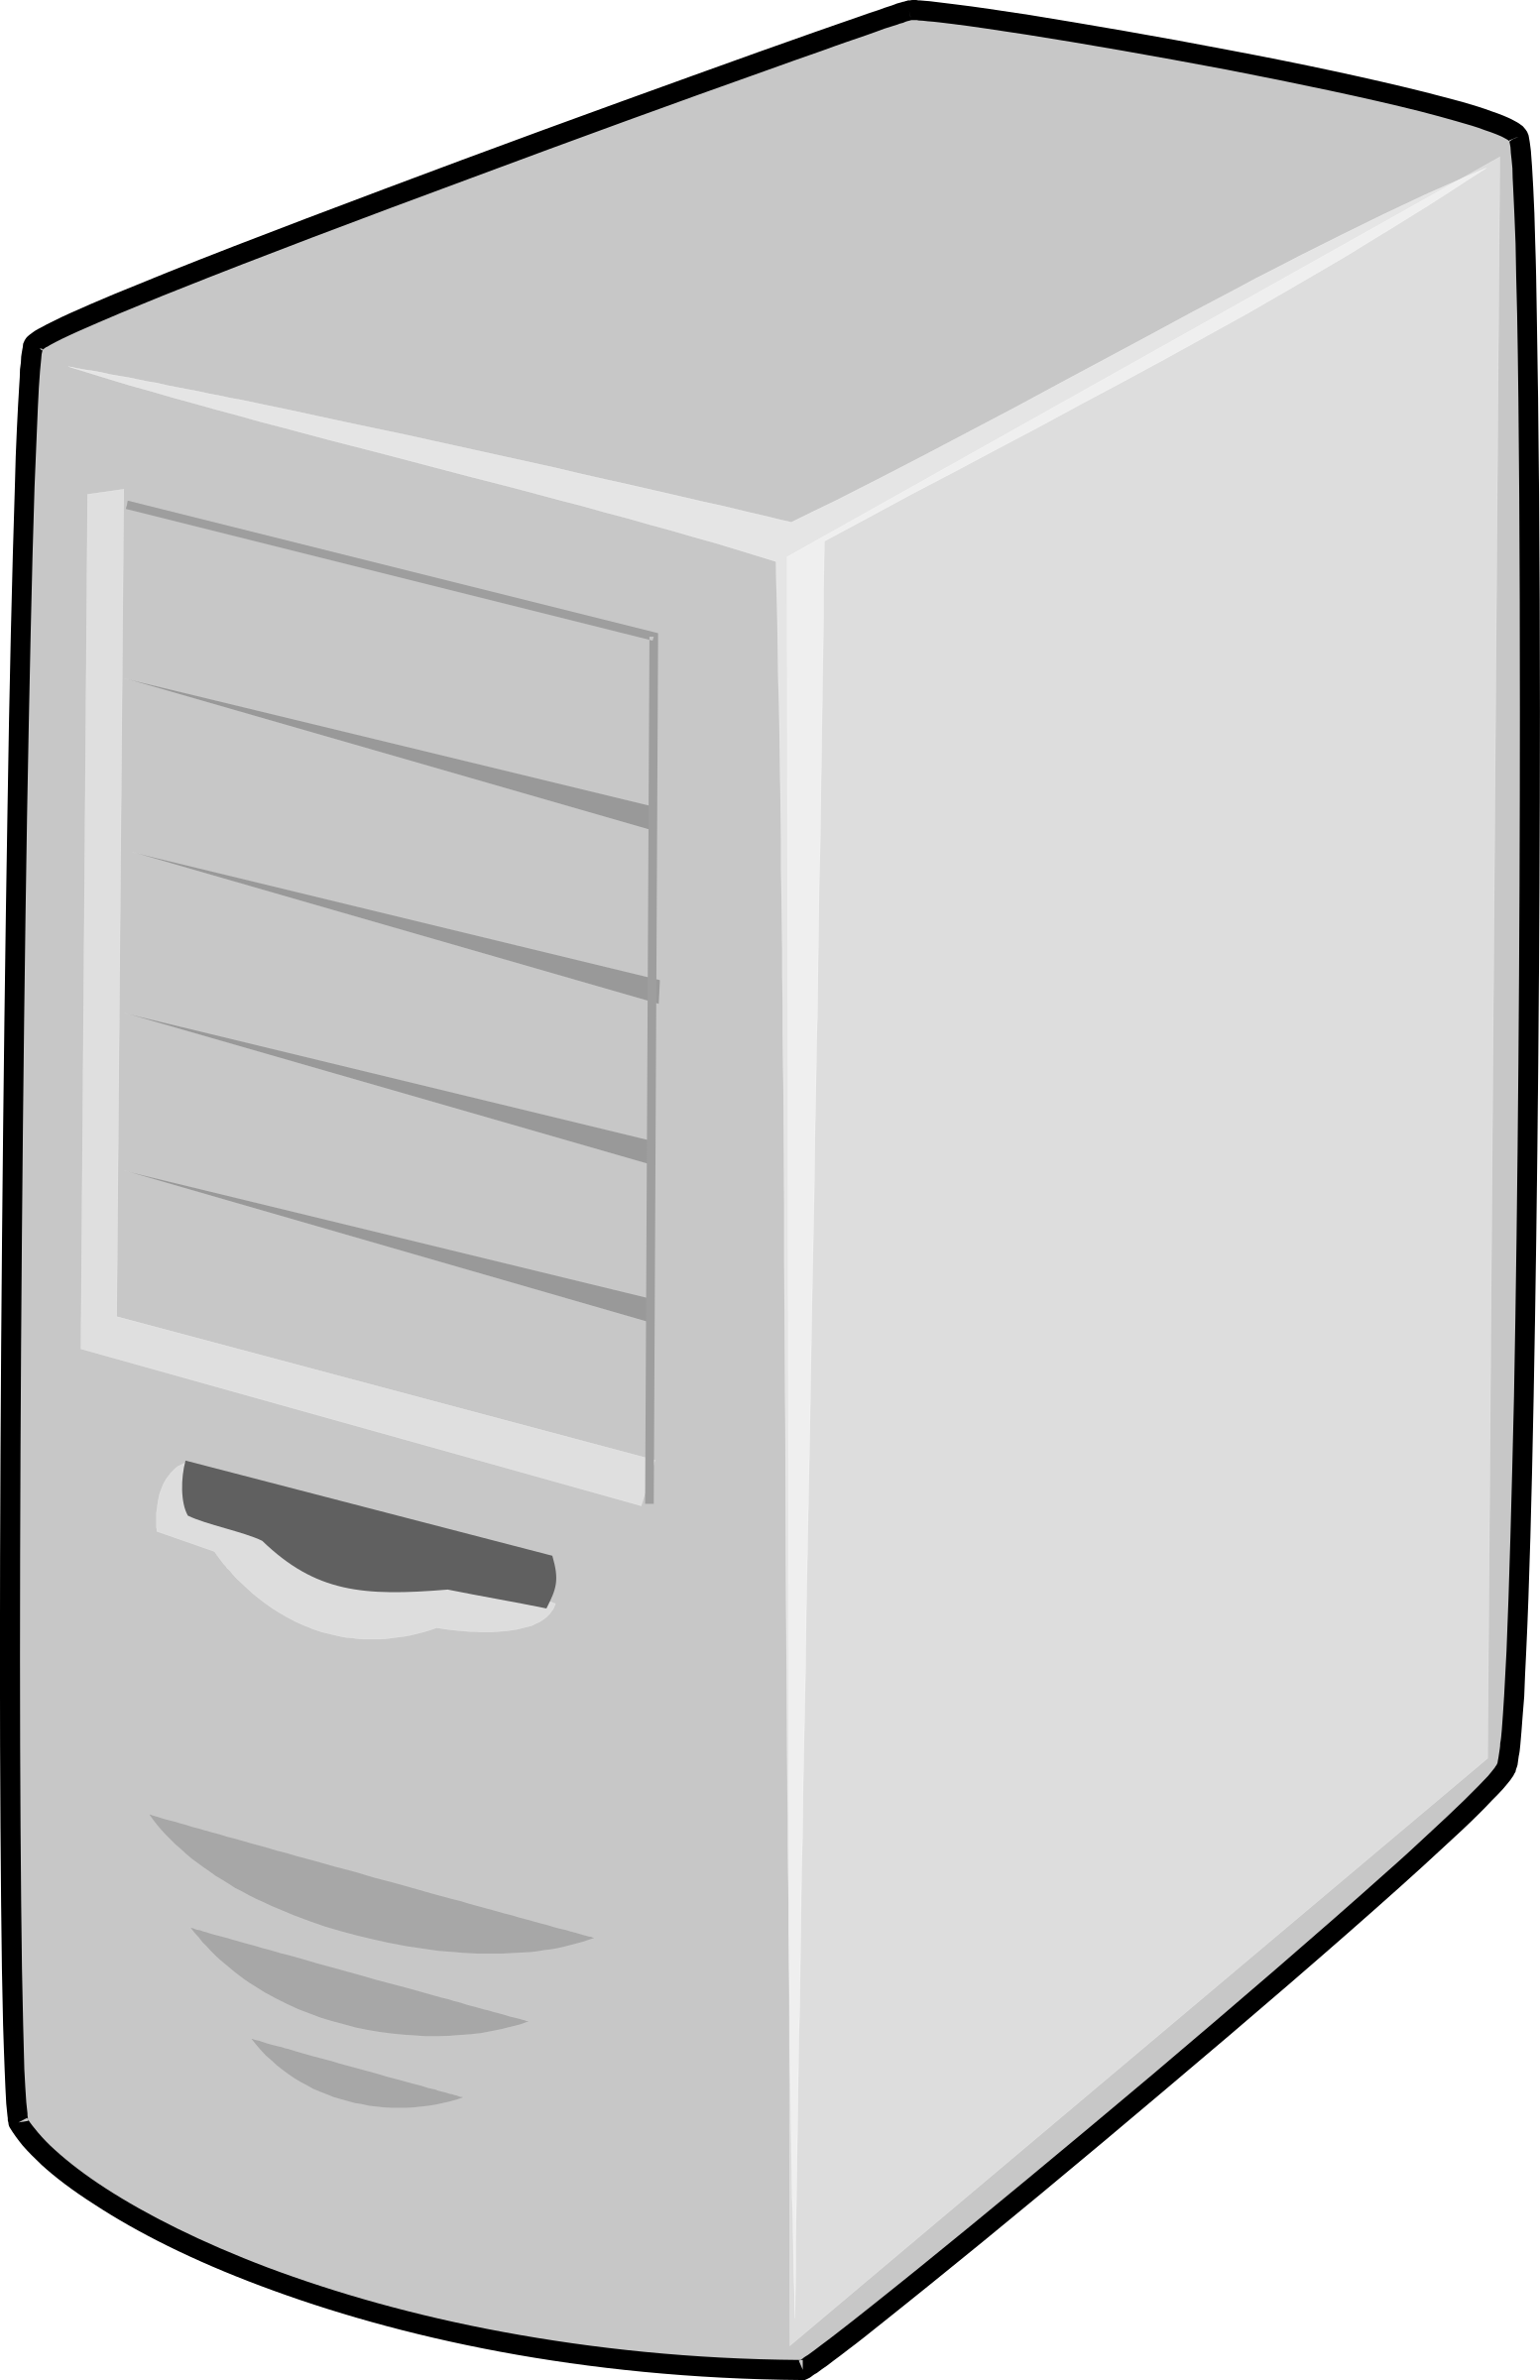 Dedicated Server PNG Image